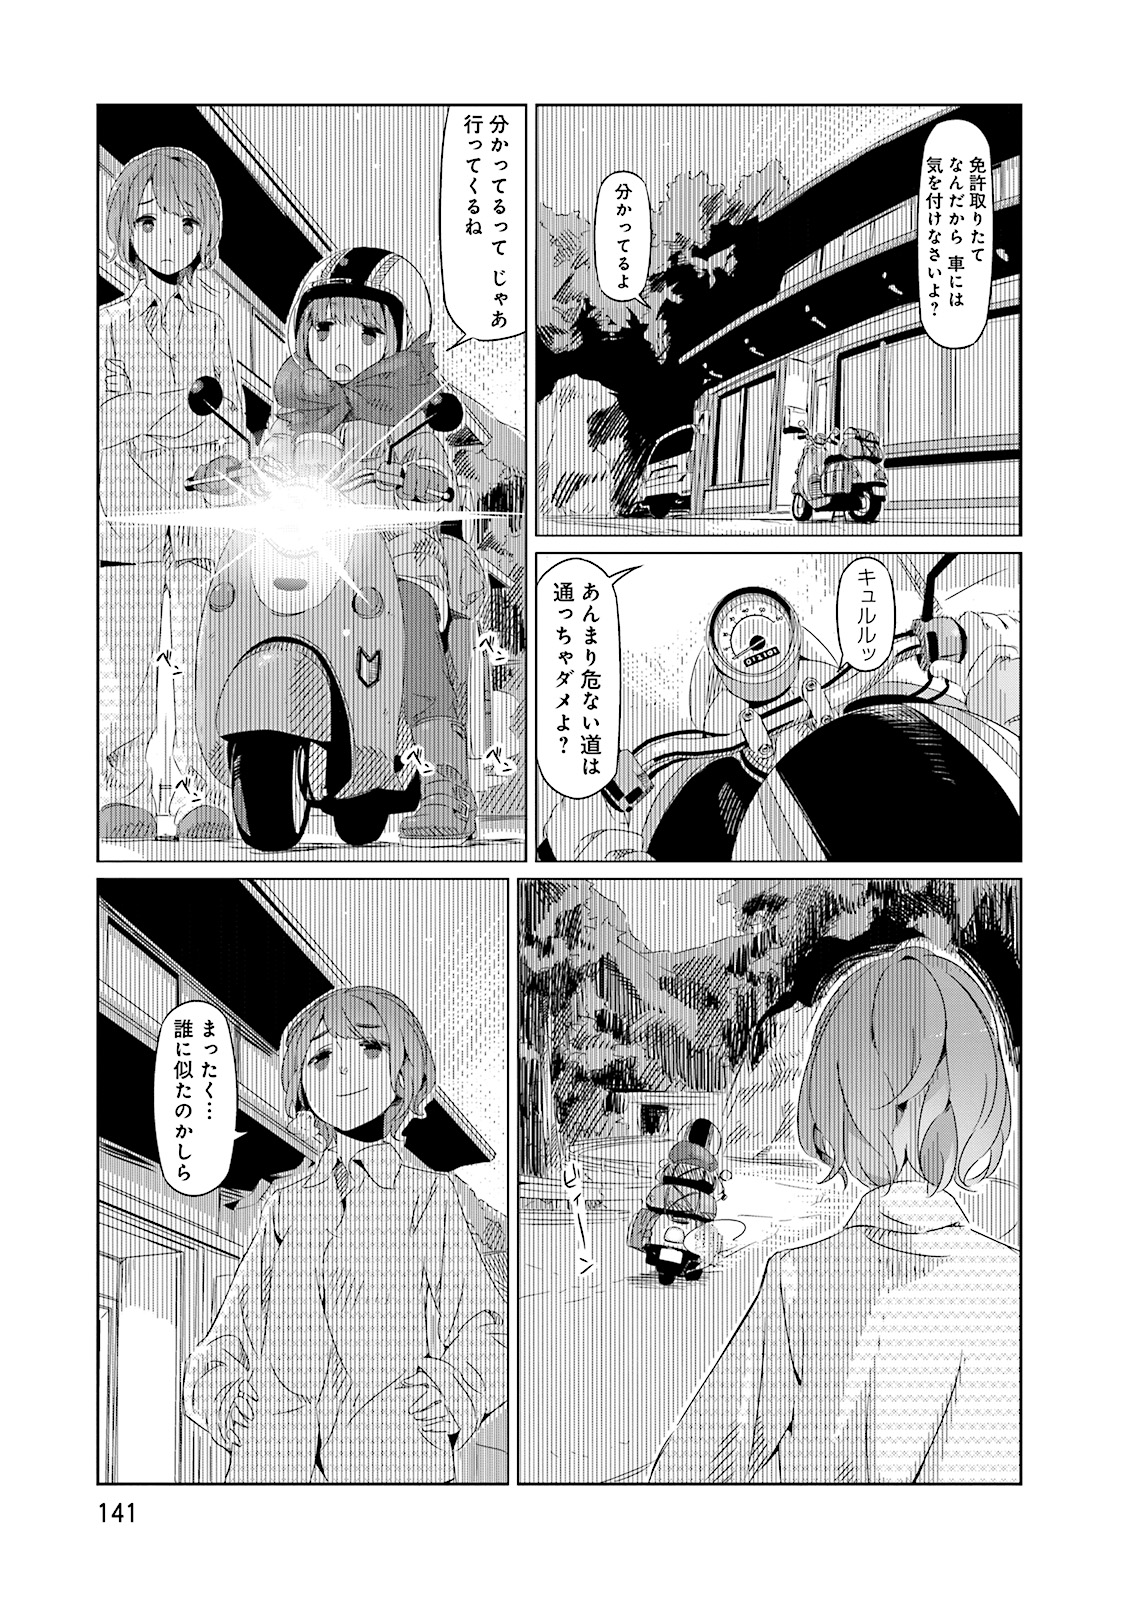 Yuru Camp - Chapter 6 - Page 1